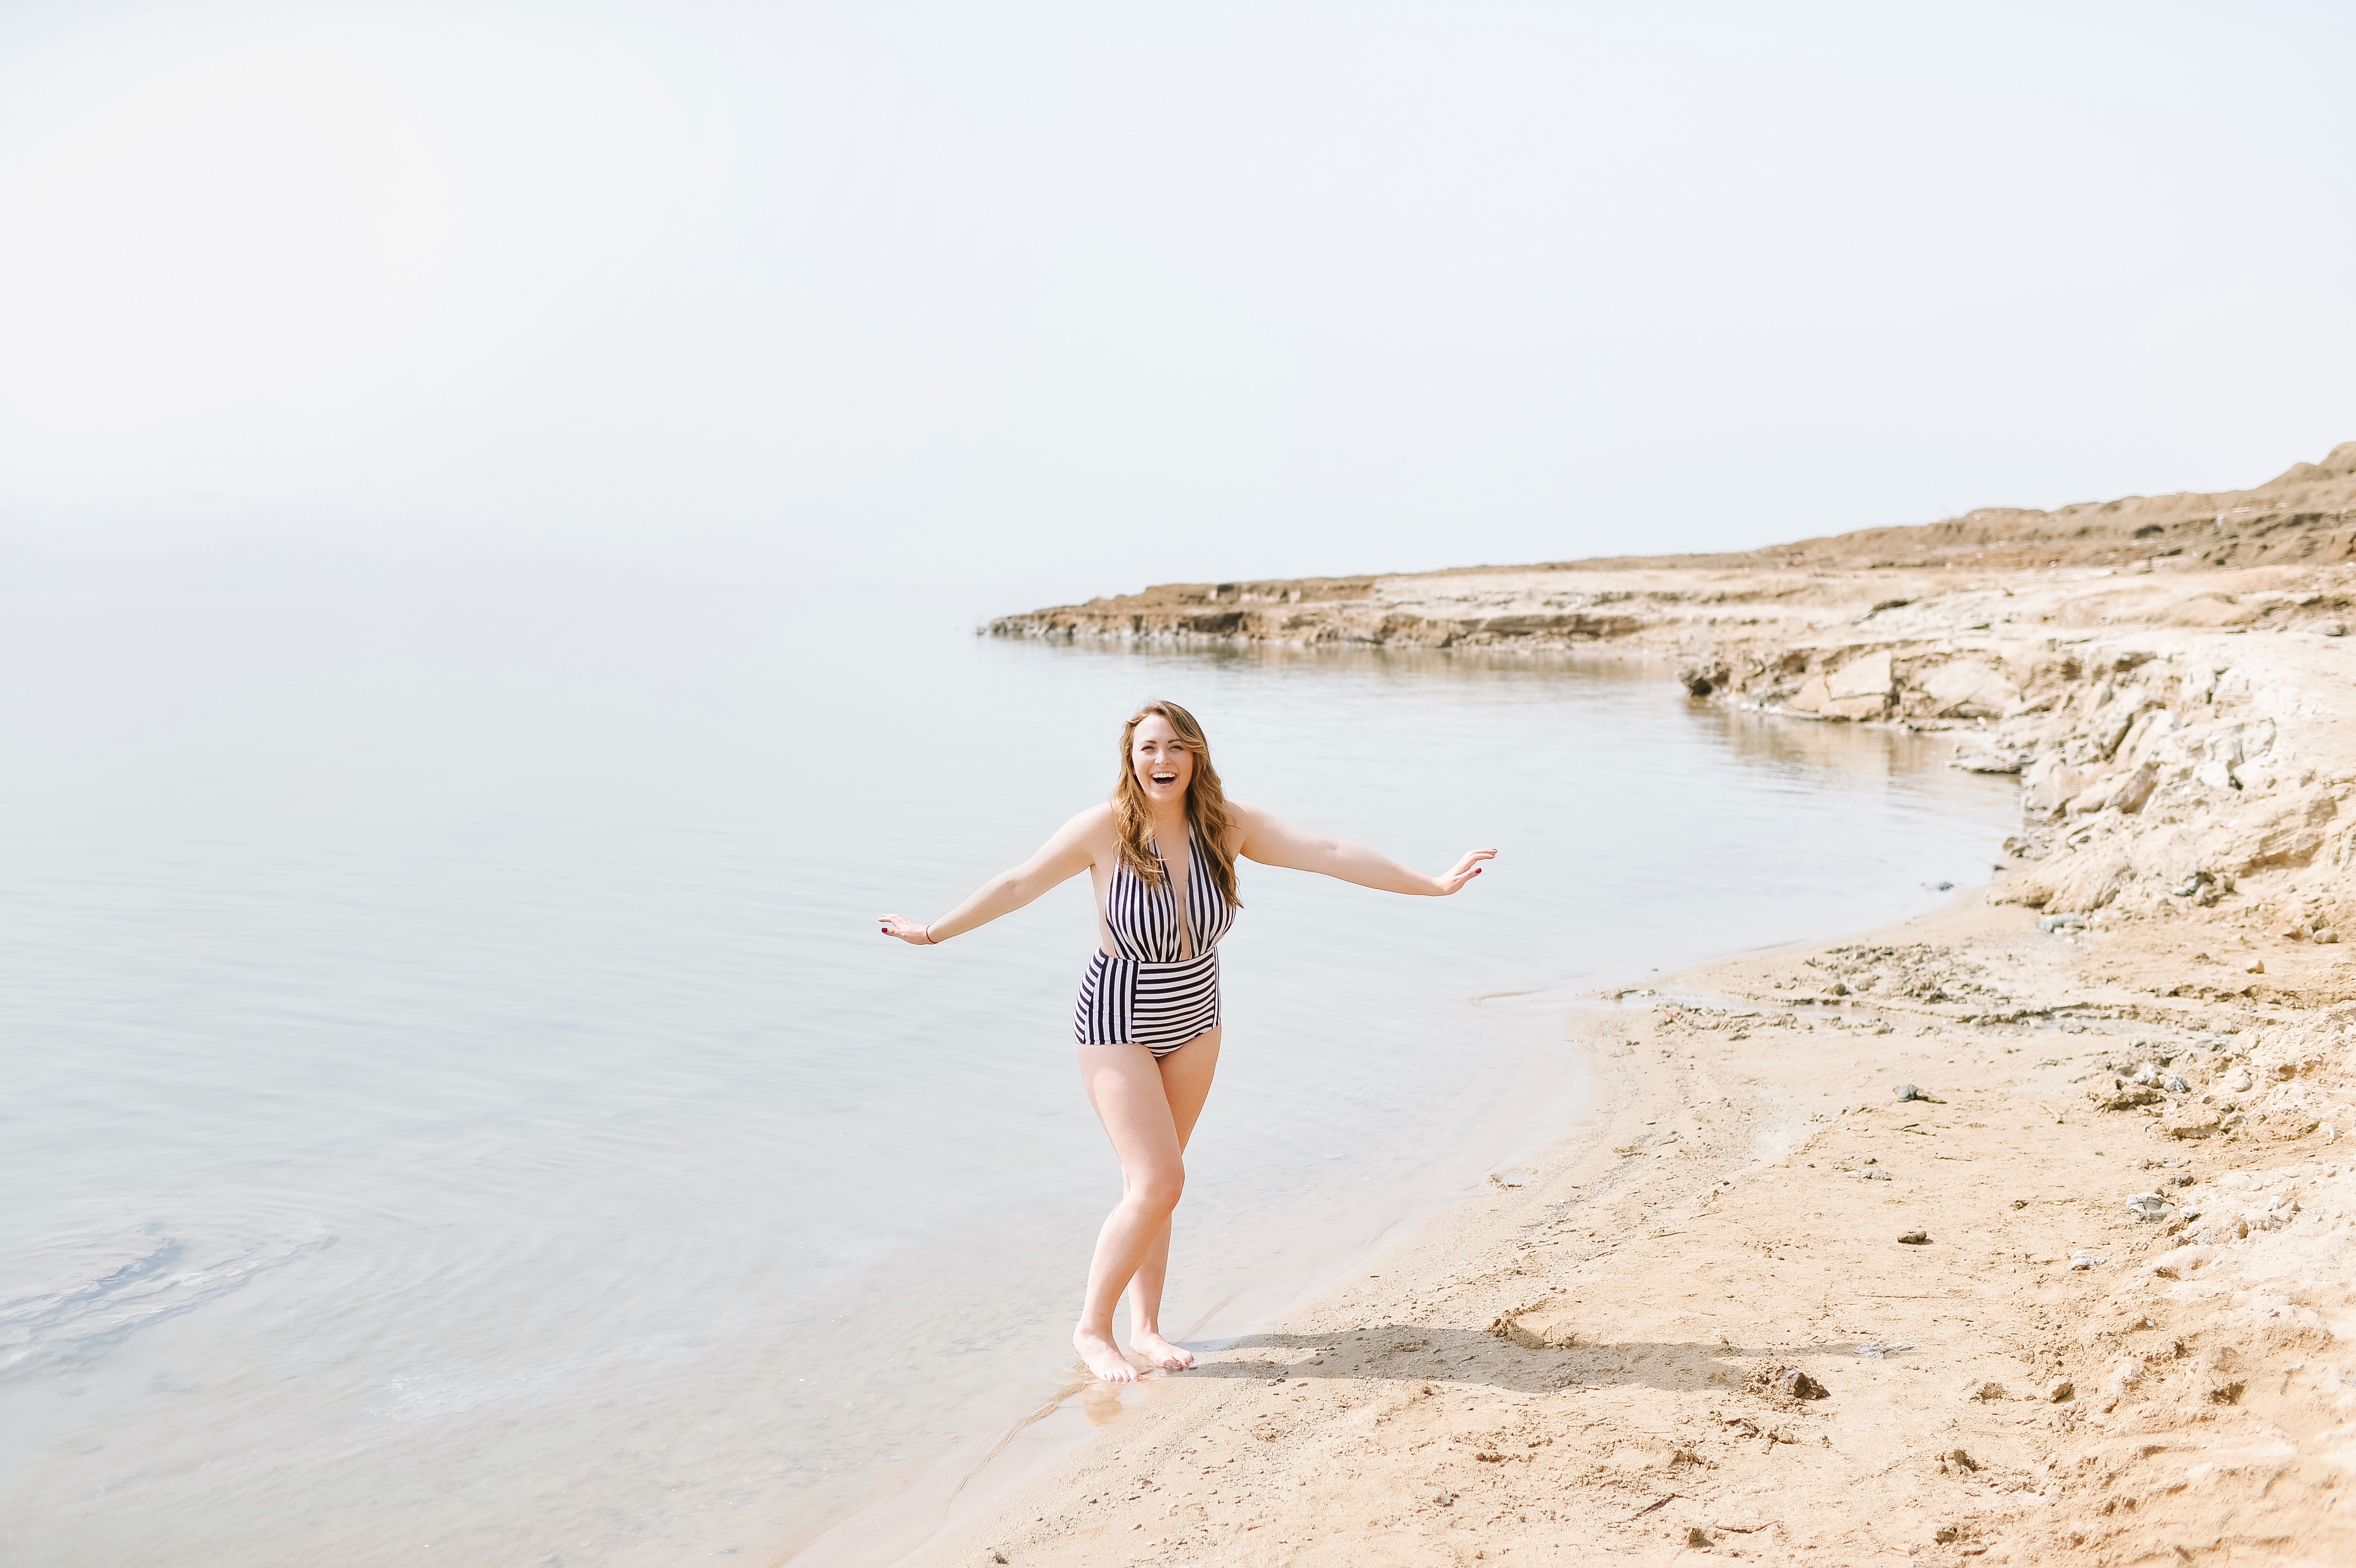 Isreal Tour to the Dead Sea - Tel Aviv Travel Guide by Natalie Franke